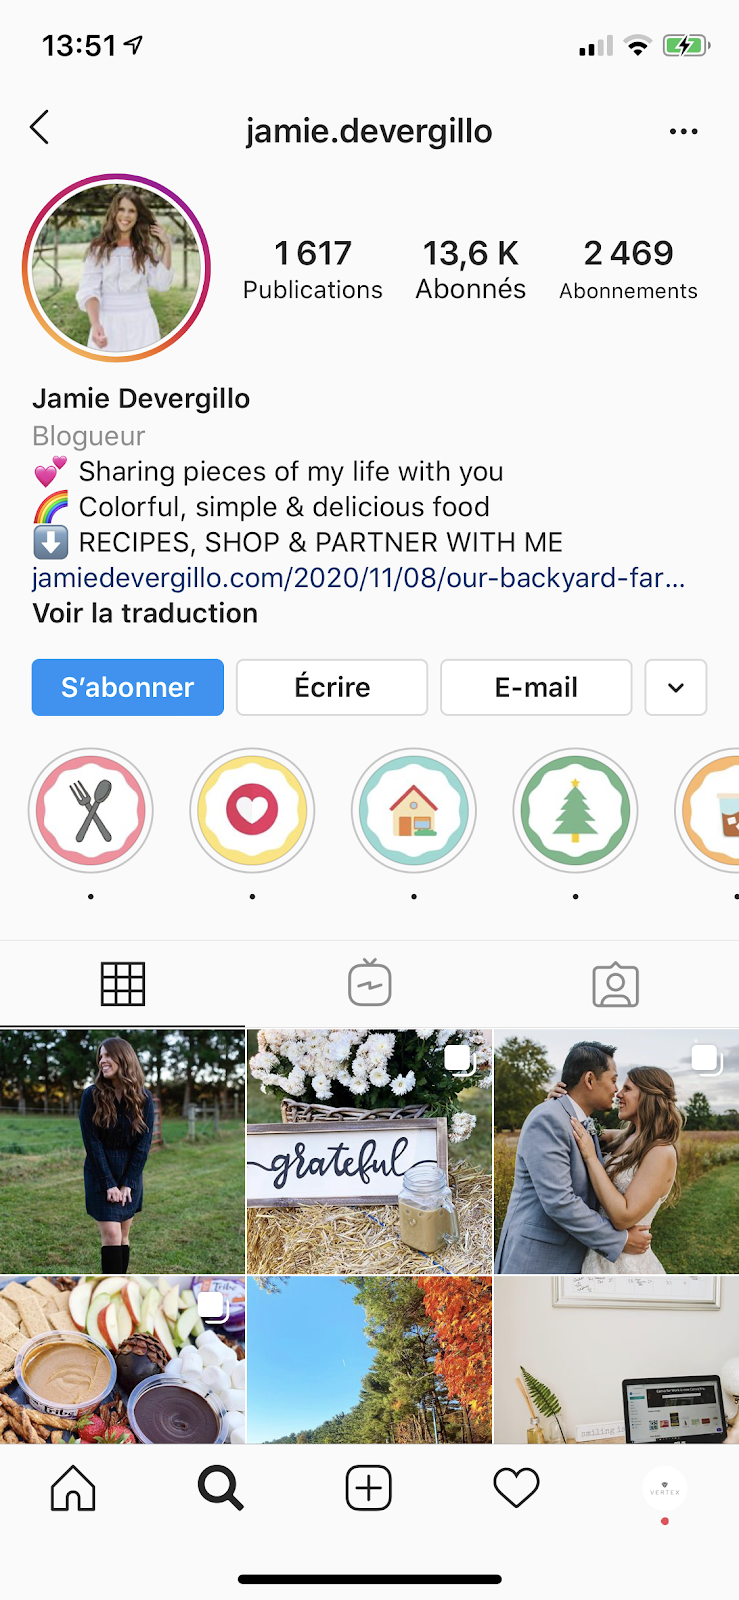 jamie devergillo profile on instagram